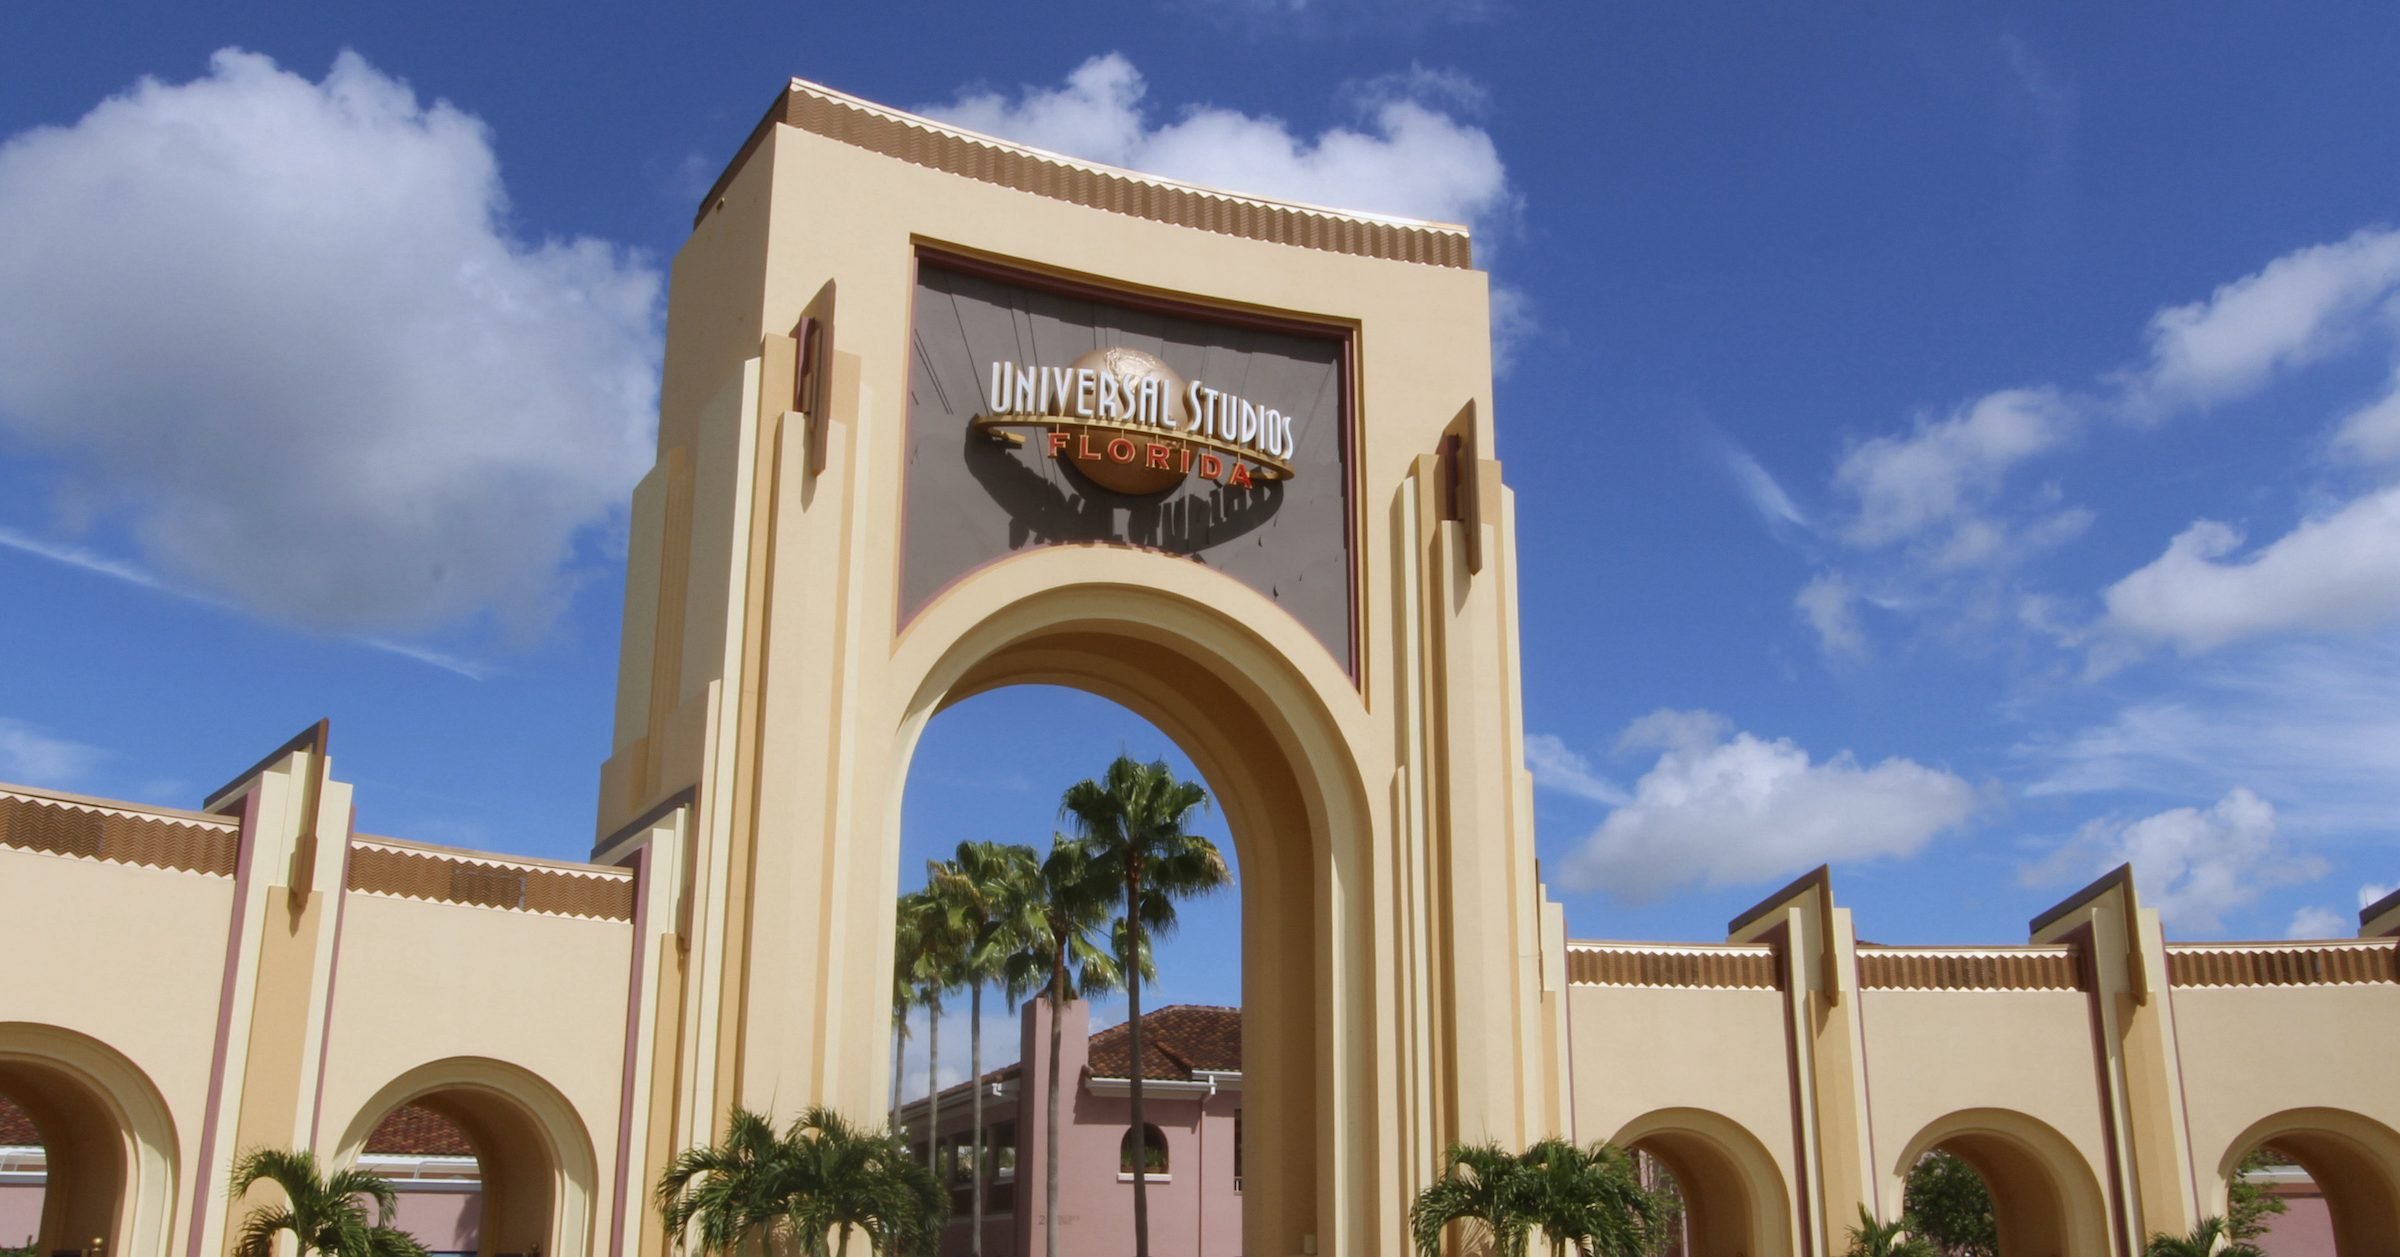 02 Universal Studios Florida 1 2400x1257 